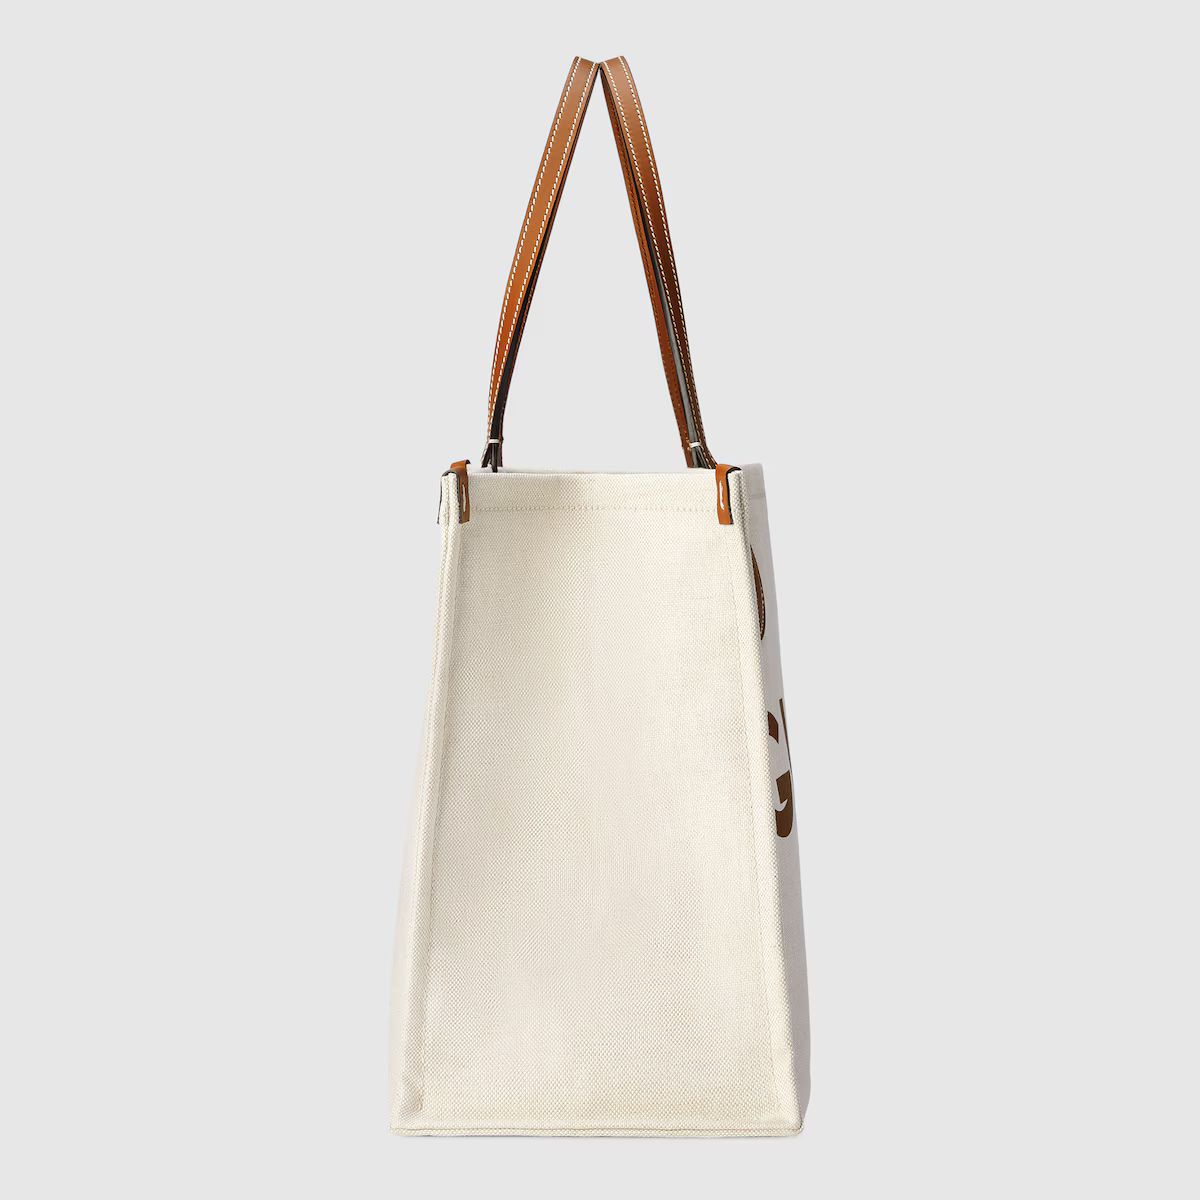 Medium tote bag with Gucci print | Gucci (US)